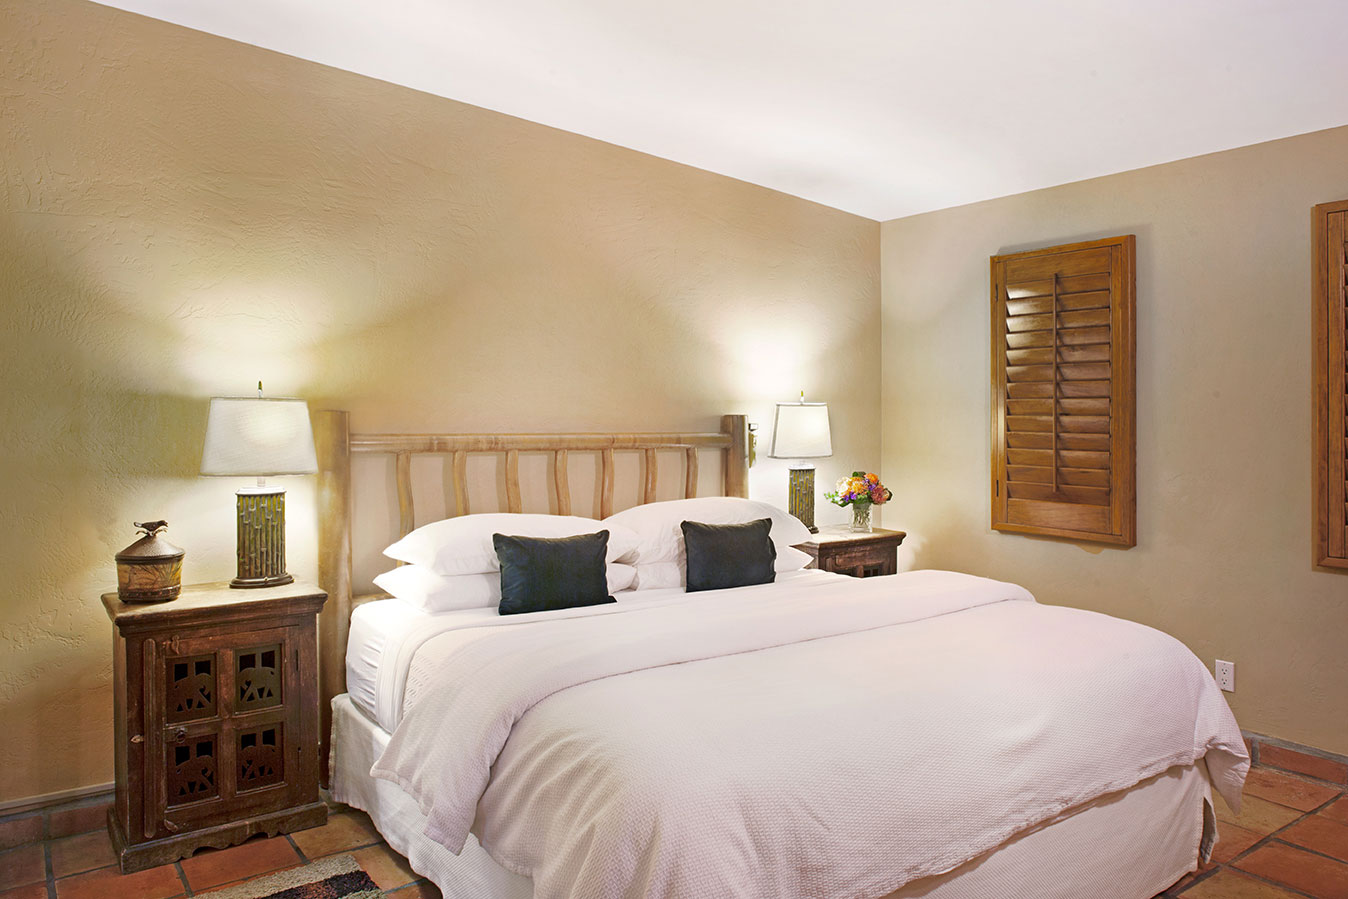 Deluxe Suite bedroom at The Hacienda at Warm Sands